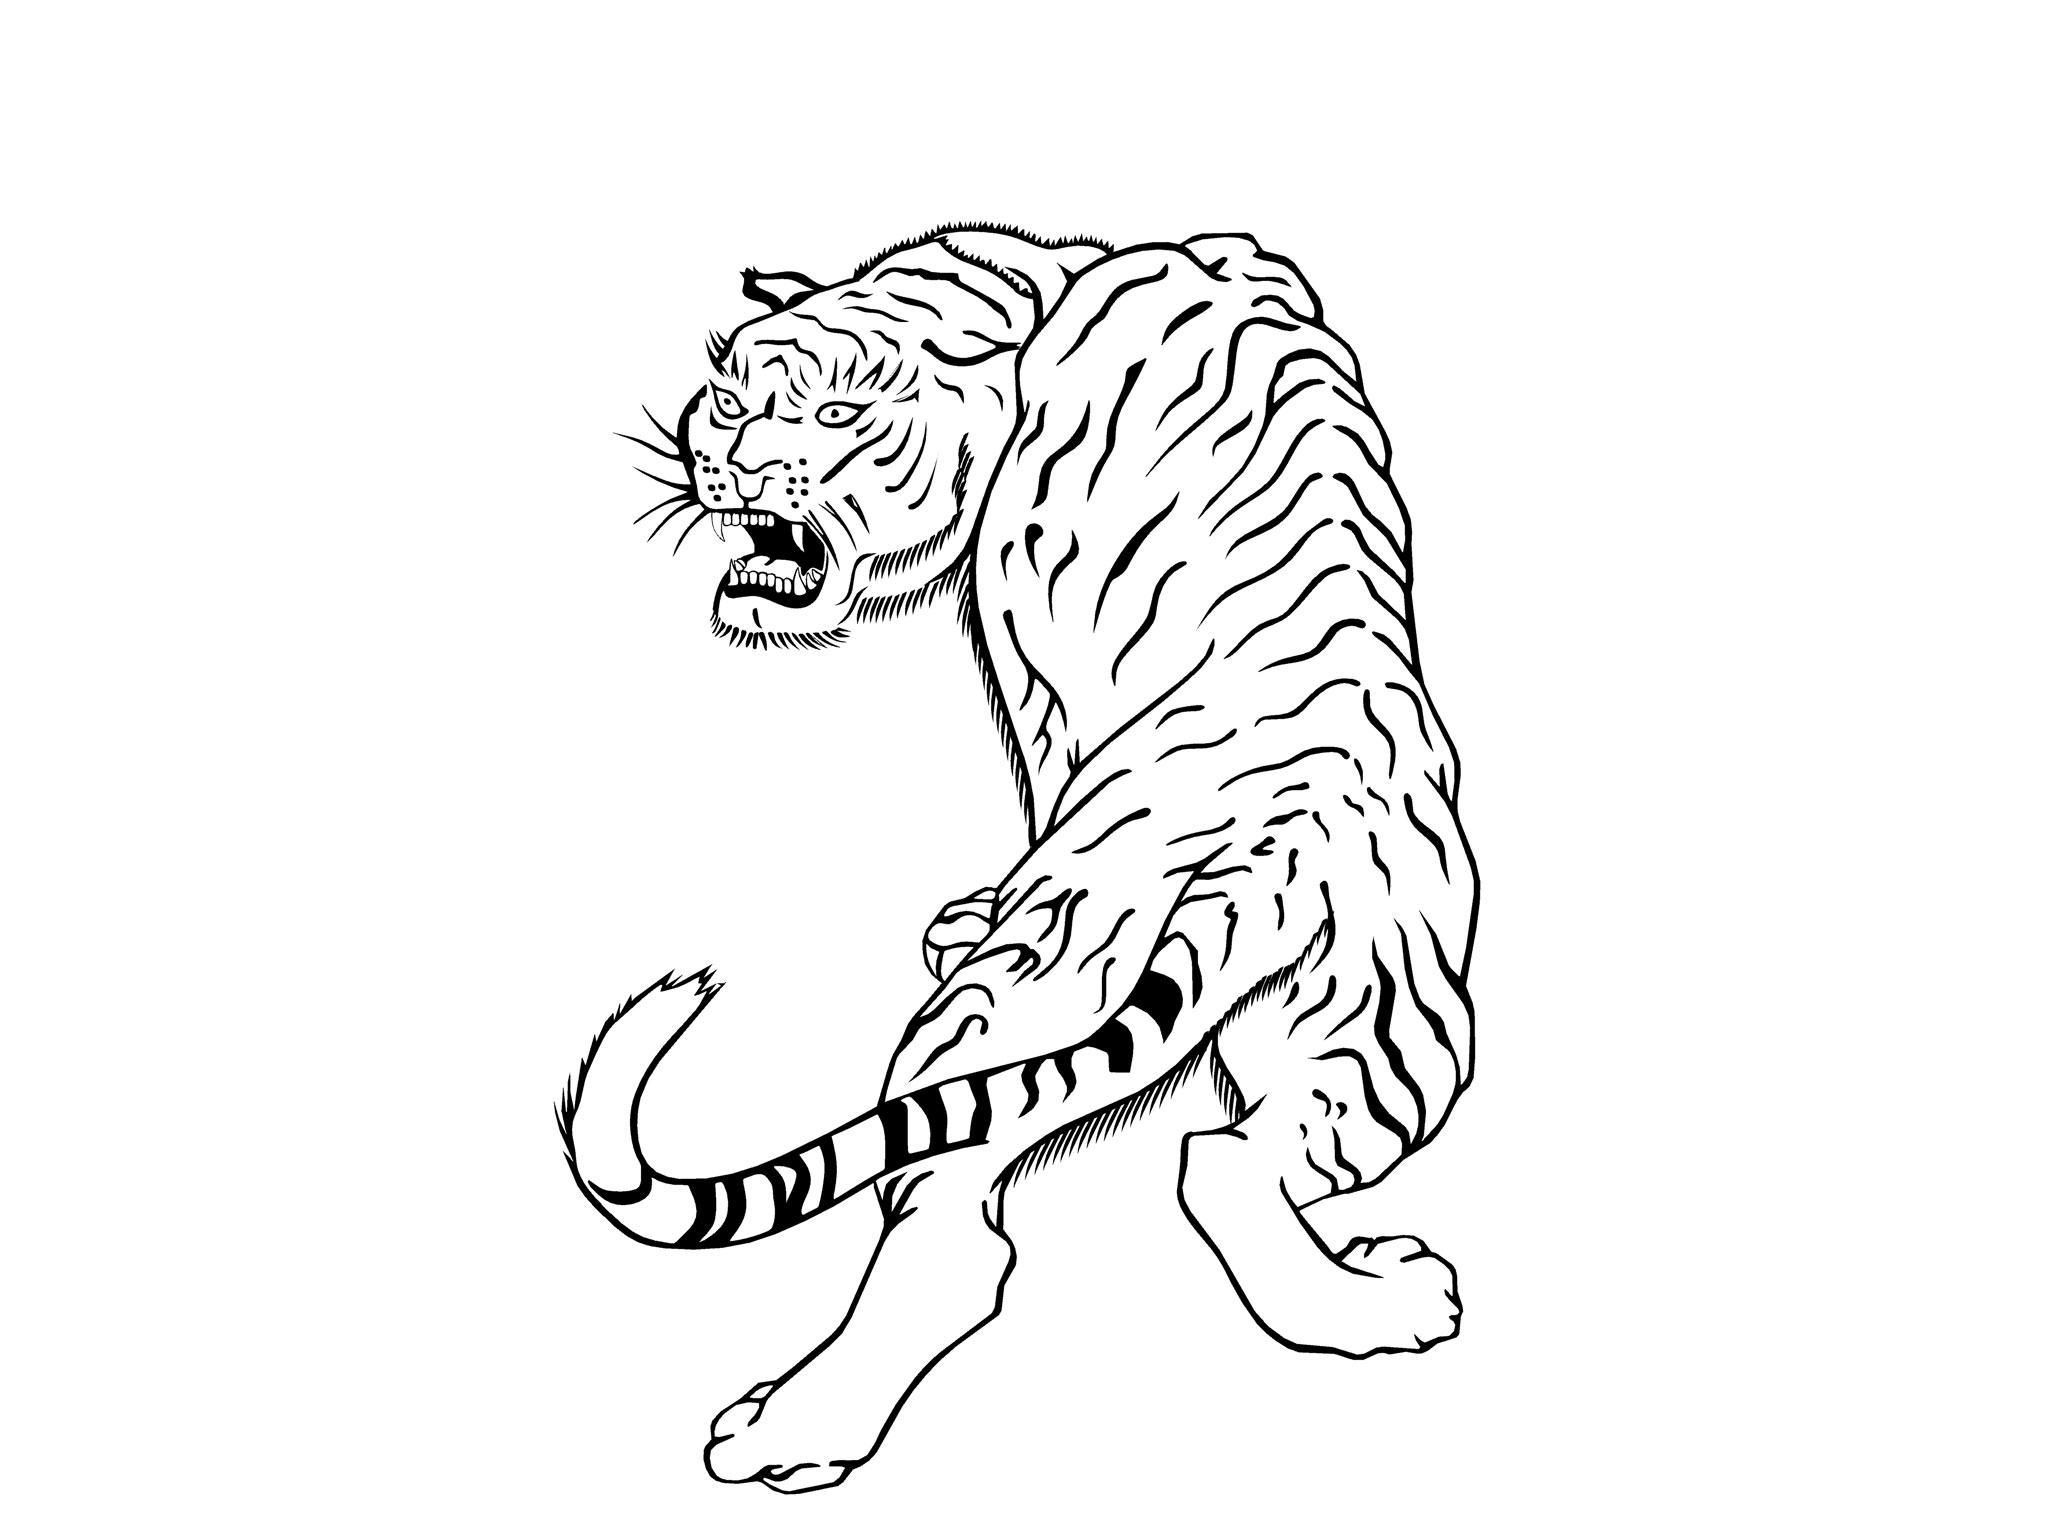 Plain outline tiger tattoo design